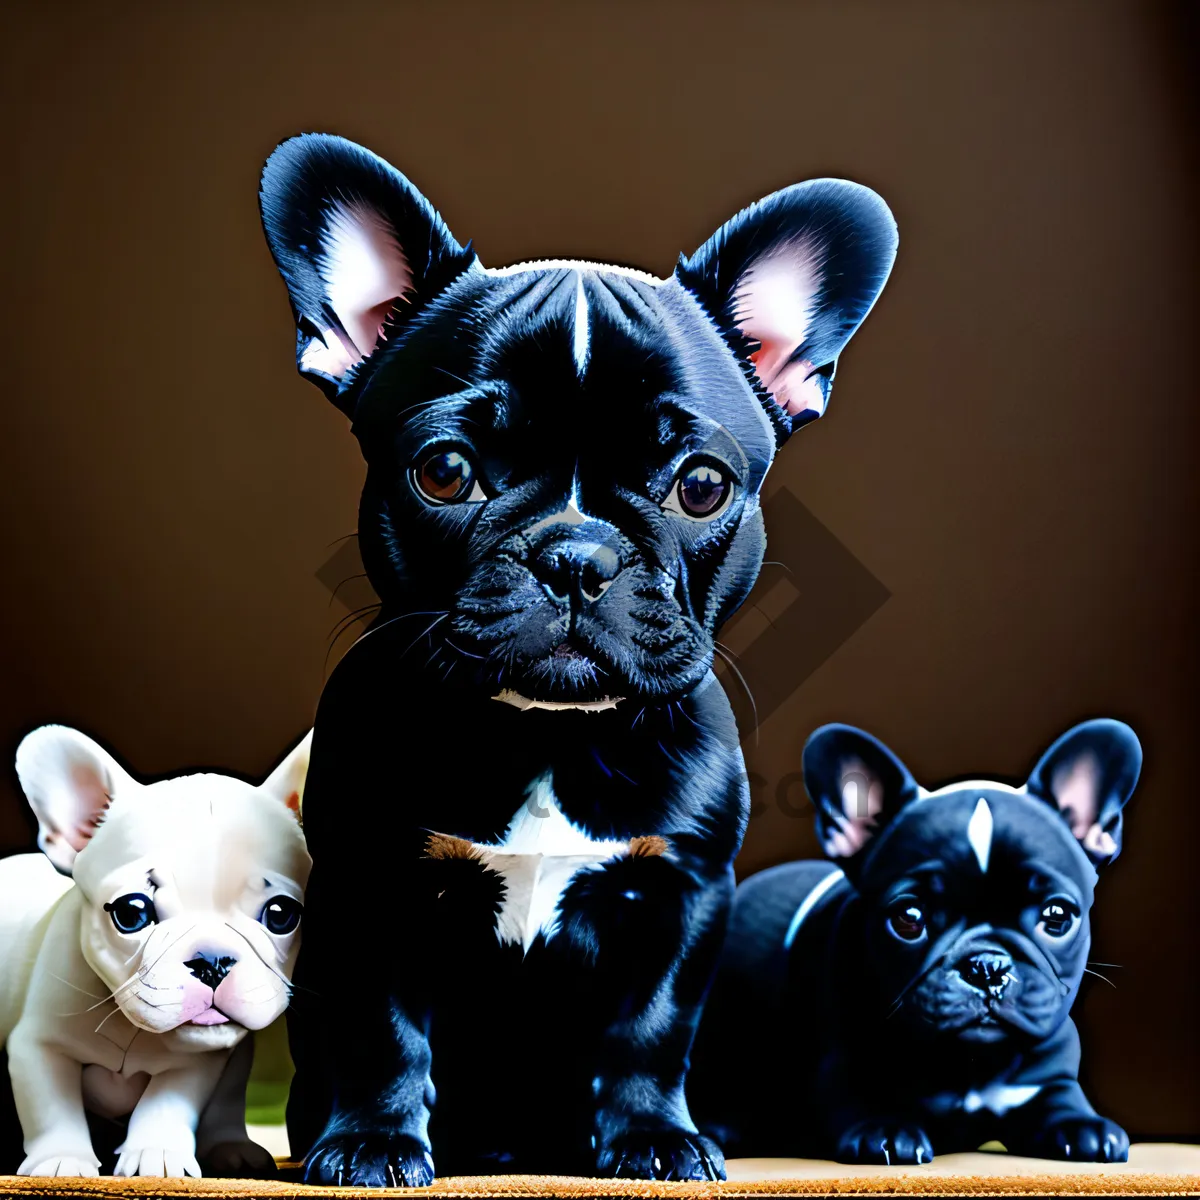 Picture of Cute Bulldog Piggy Bank - Adorable Studio Portrait of Pet Canine